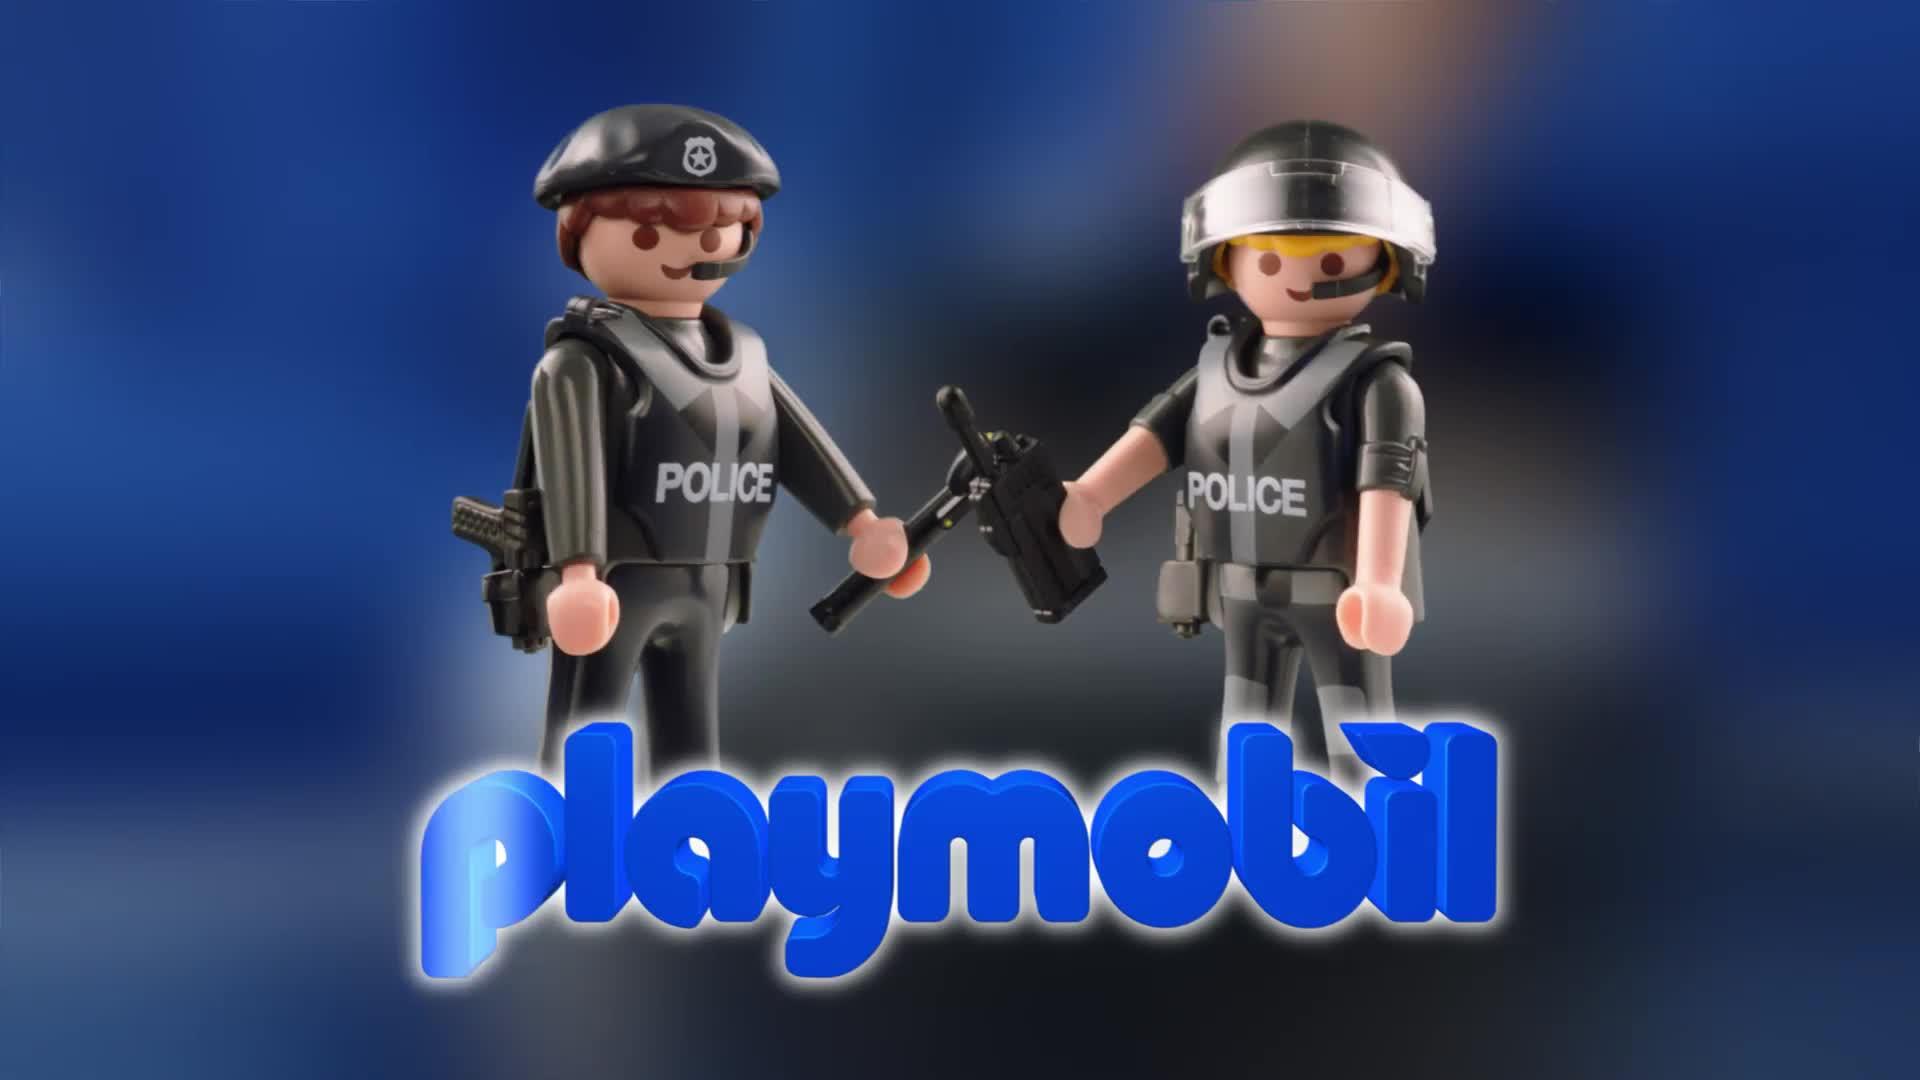 Playmobil - Commissariat de police transportable